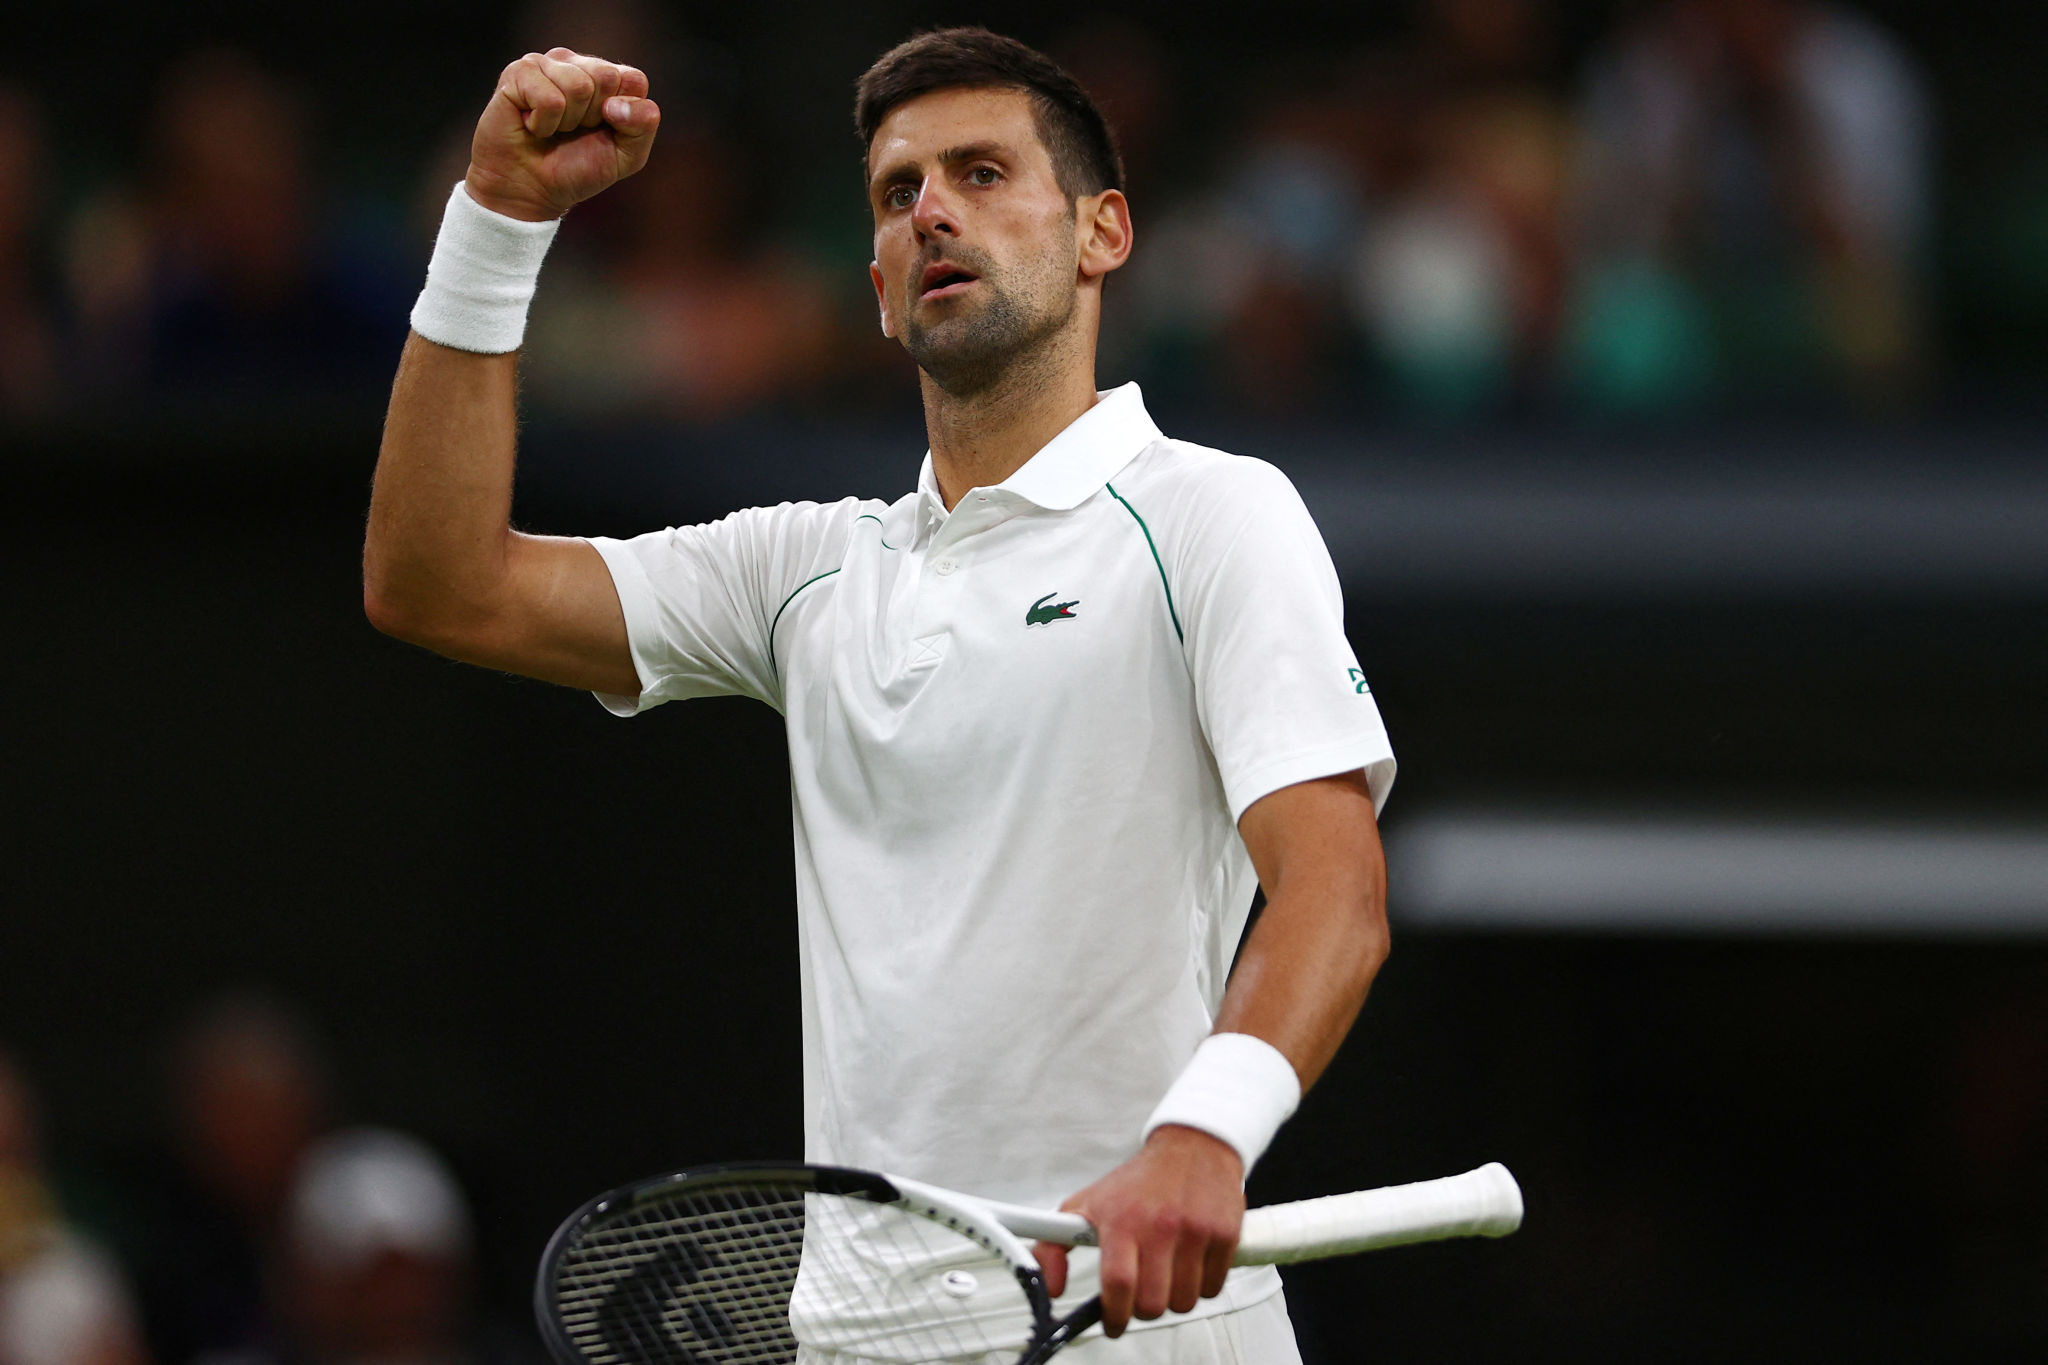 Djokovic vs Rijthoven LIVE: Novak Djokovic in 5th straight quarterfinals, brushes aside Tim van Rijthoven in four-set battle: Wimbledon 2022 LIVE